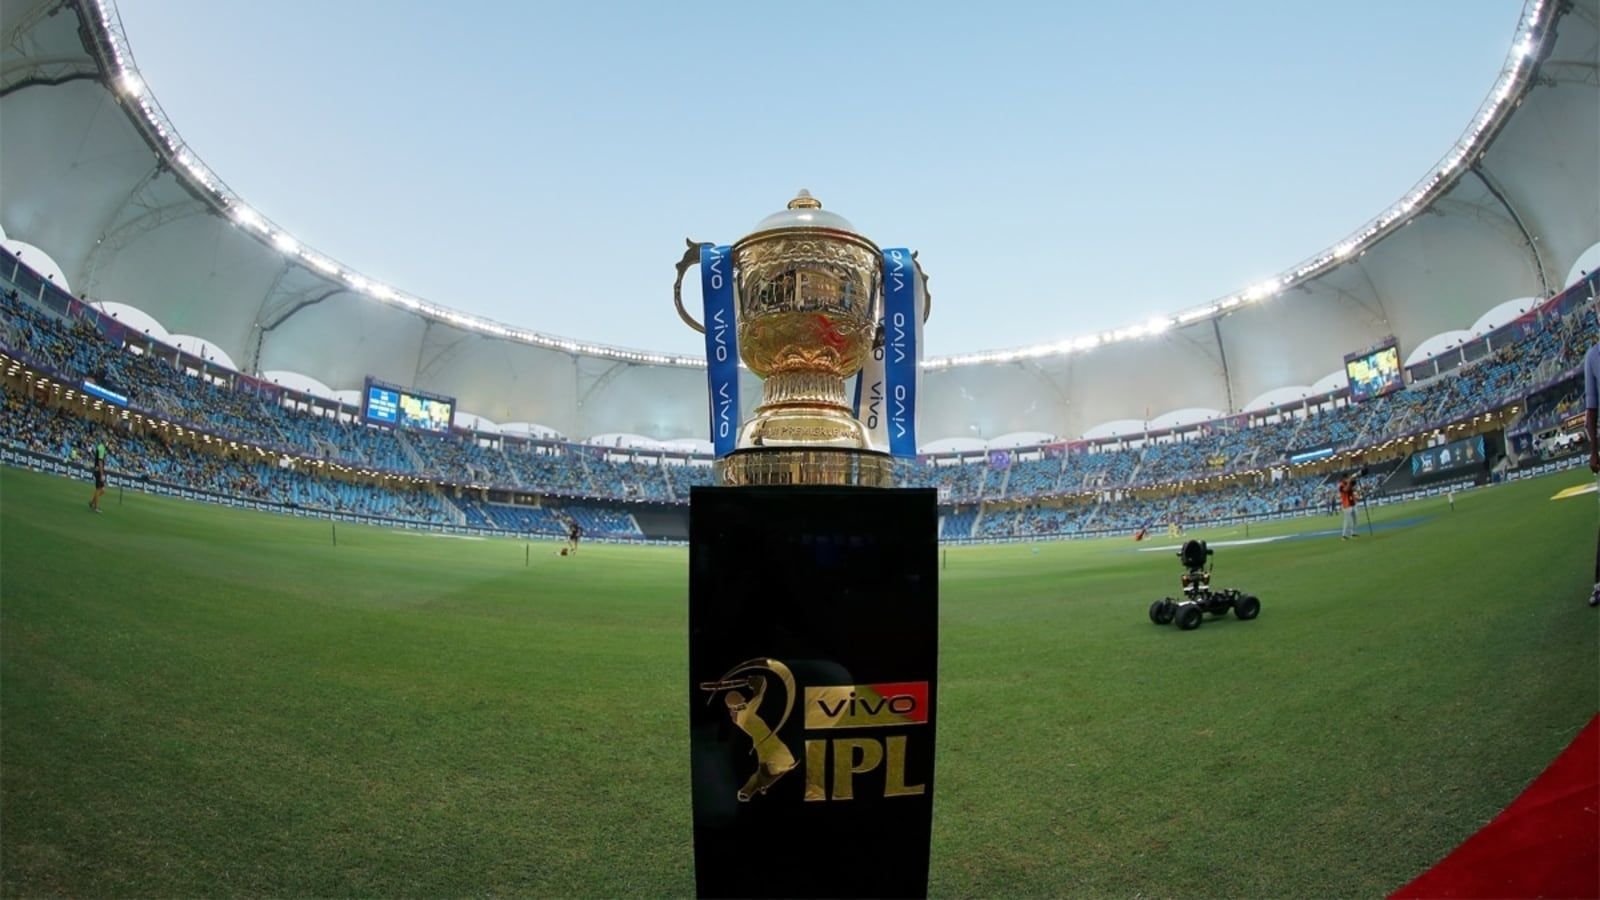 The fifteenth IPL season began on March 26, 2022